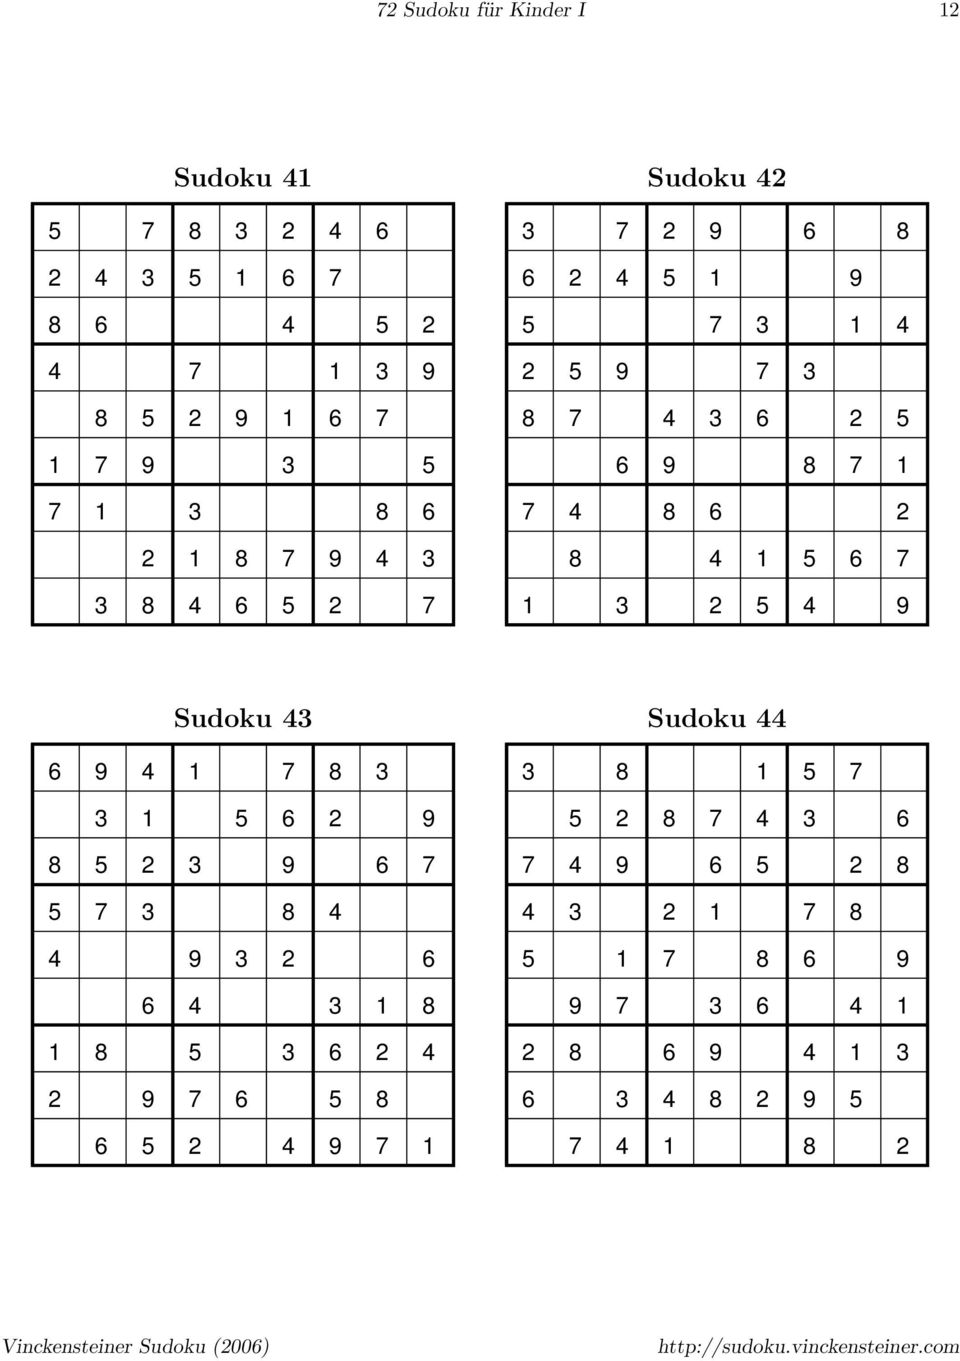 7 3 5 9 Sudoku 3 6 9 7 8 3 3 5 6 9 8 5 3 9 6 7 5 7 3 8 9 3 6 6 3 8 8 5 3 6 9 7 6 5 8